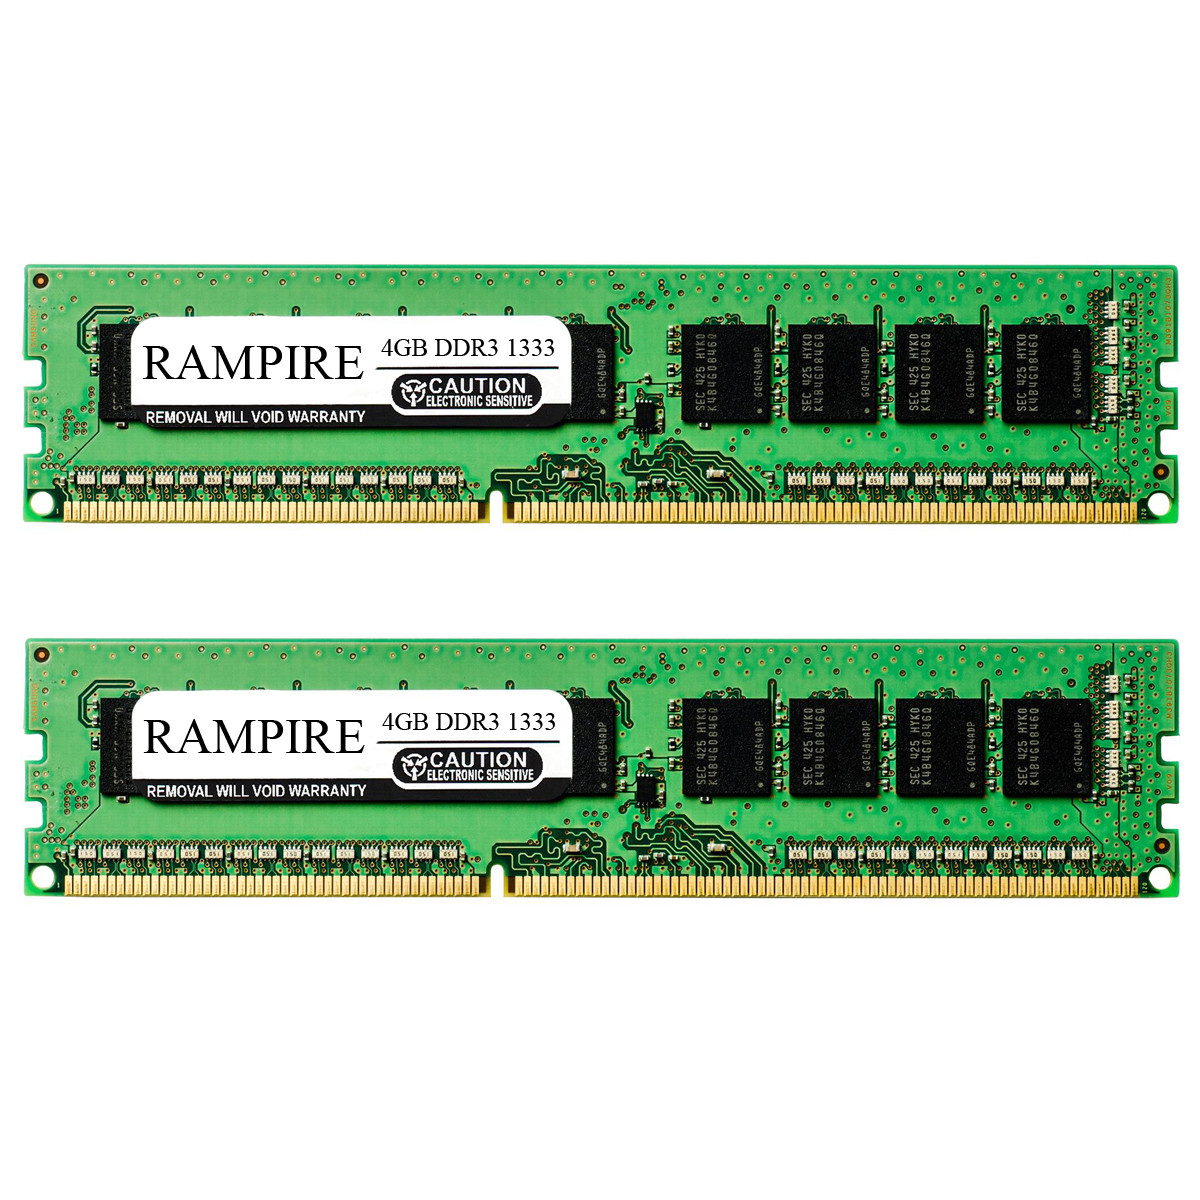 RAMPIRE 8GB (2 x 4GB) DDR3 1333 (PC3 10600) 240-Pin DDR3 SDRAM 1.5V 2Rx8 Non-ECC UDIMM Memory for Desktop PC